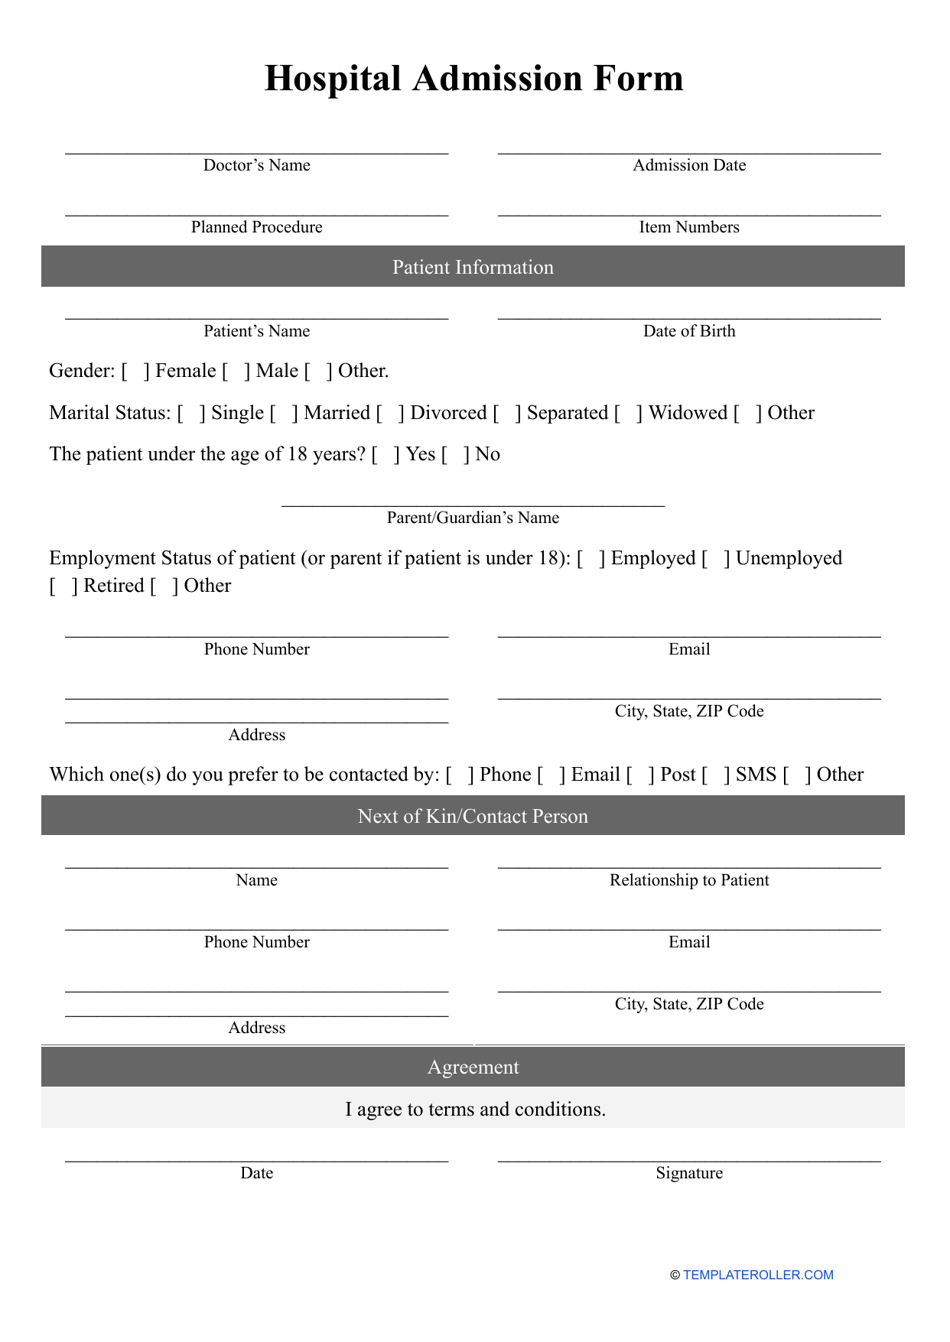 Hospital Admission Form, Page 1